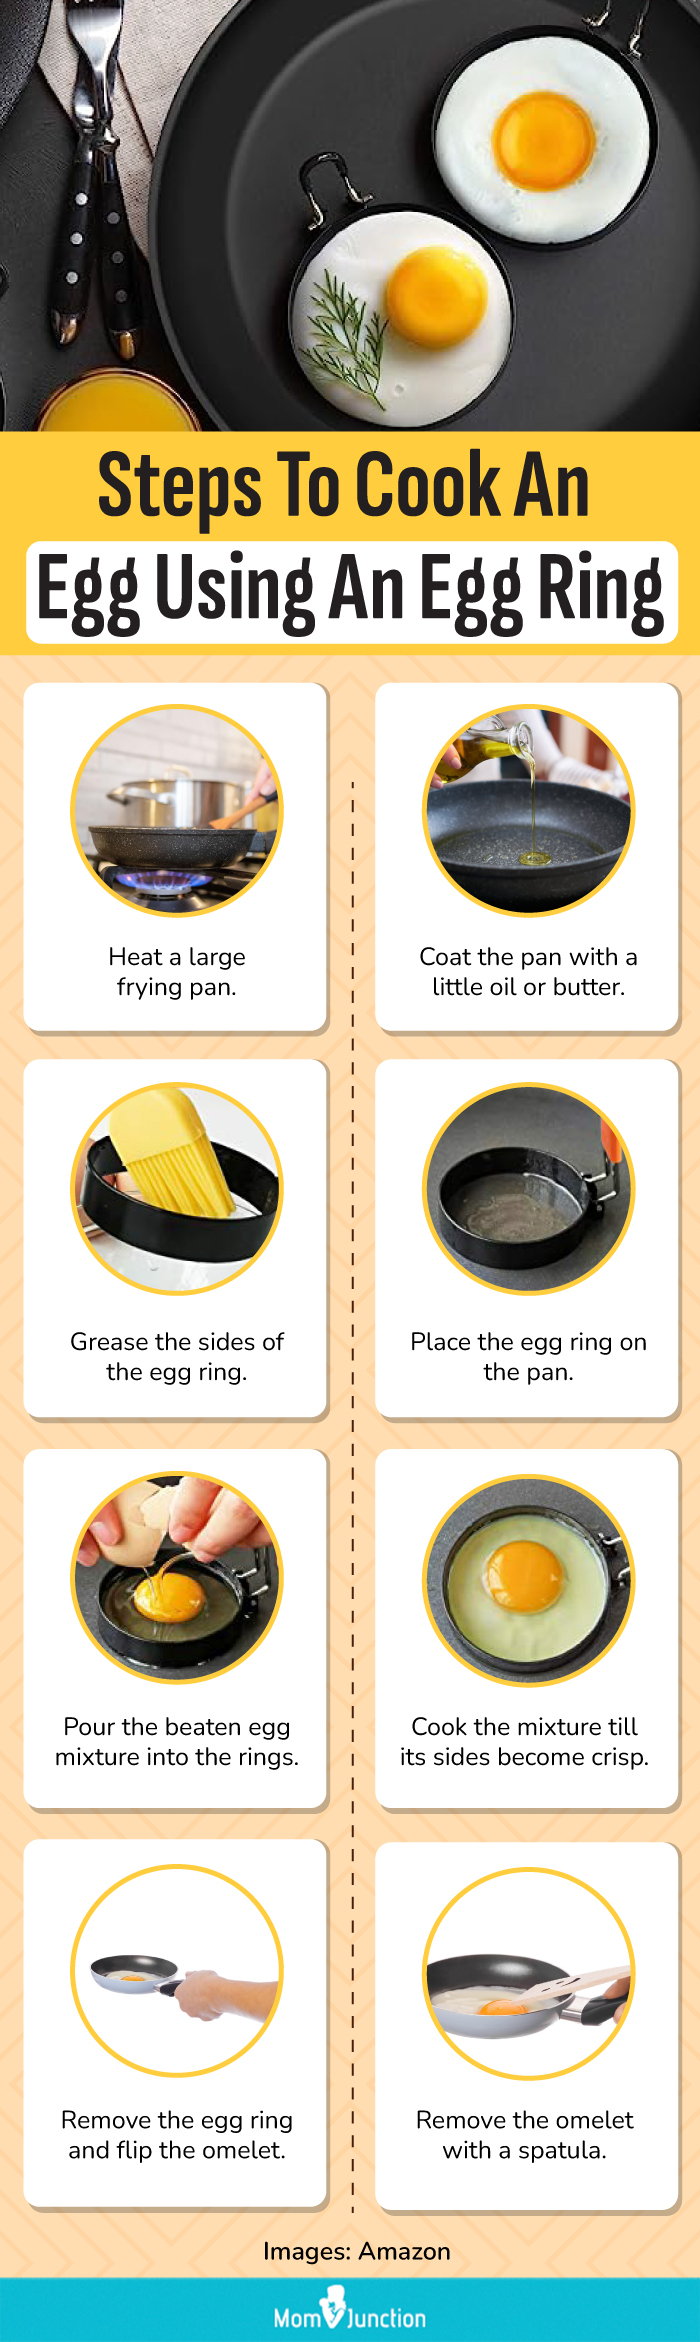 https://cdn2.momjunction.com/wp-content/uploads/2020/06/Steps-To-Cook-An-Egg-Using-An-Egg-Ring.jpg